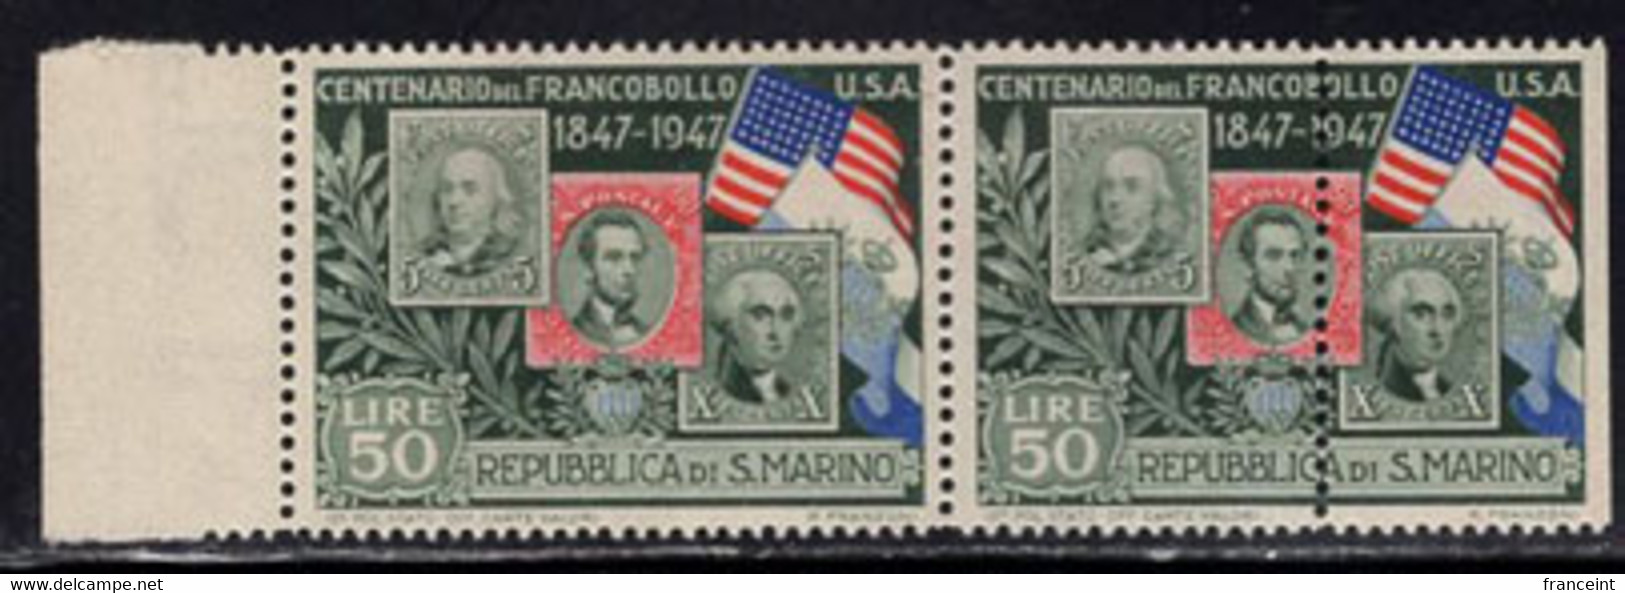 SAN MARINO(1947) US Stamps. Flag. Pair Misperforated Vertically. Scott No 271, Yvert No 313. - Errors, Freaks & Oddities (EFO)